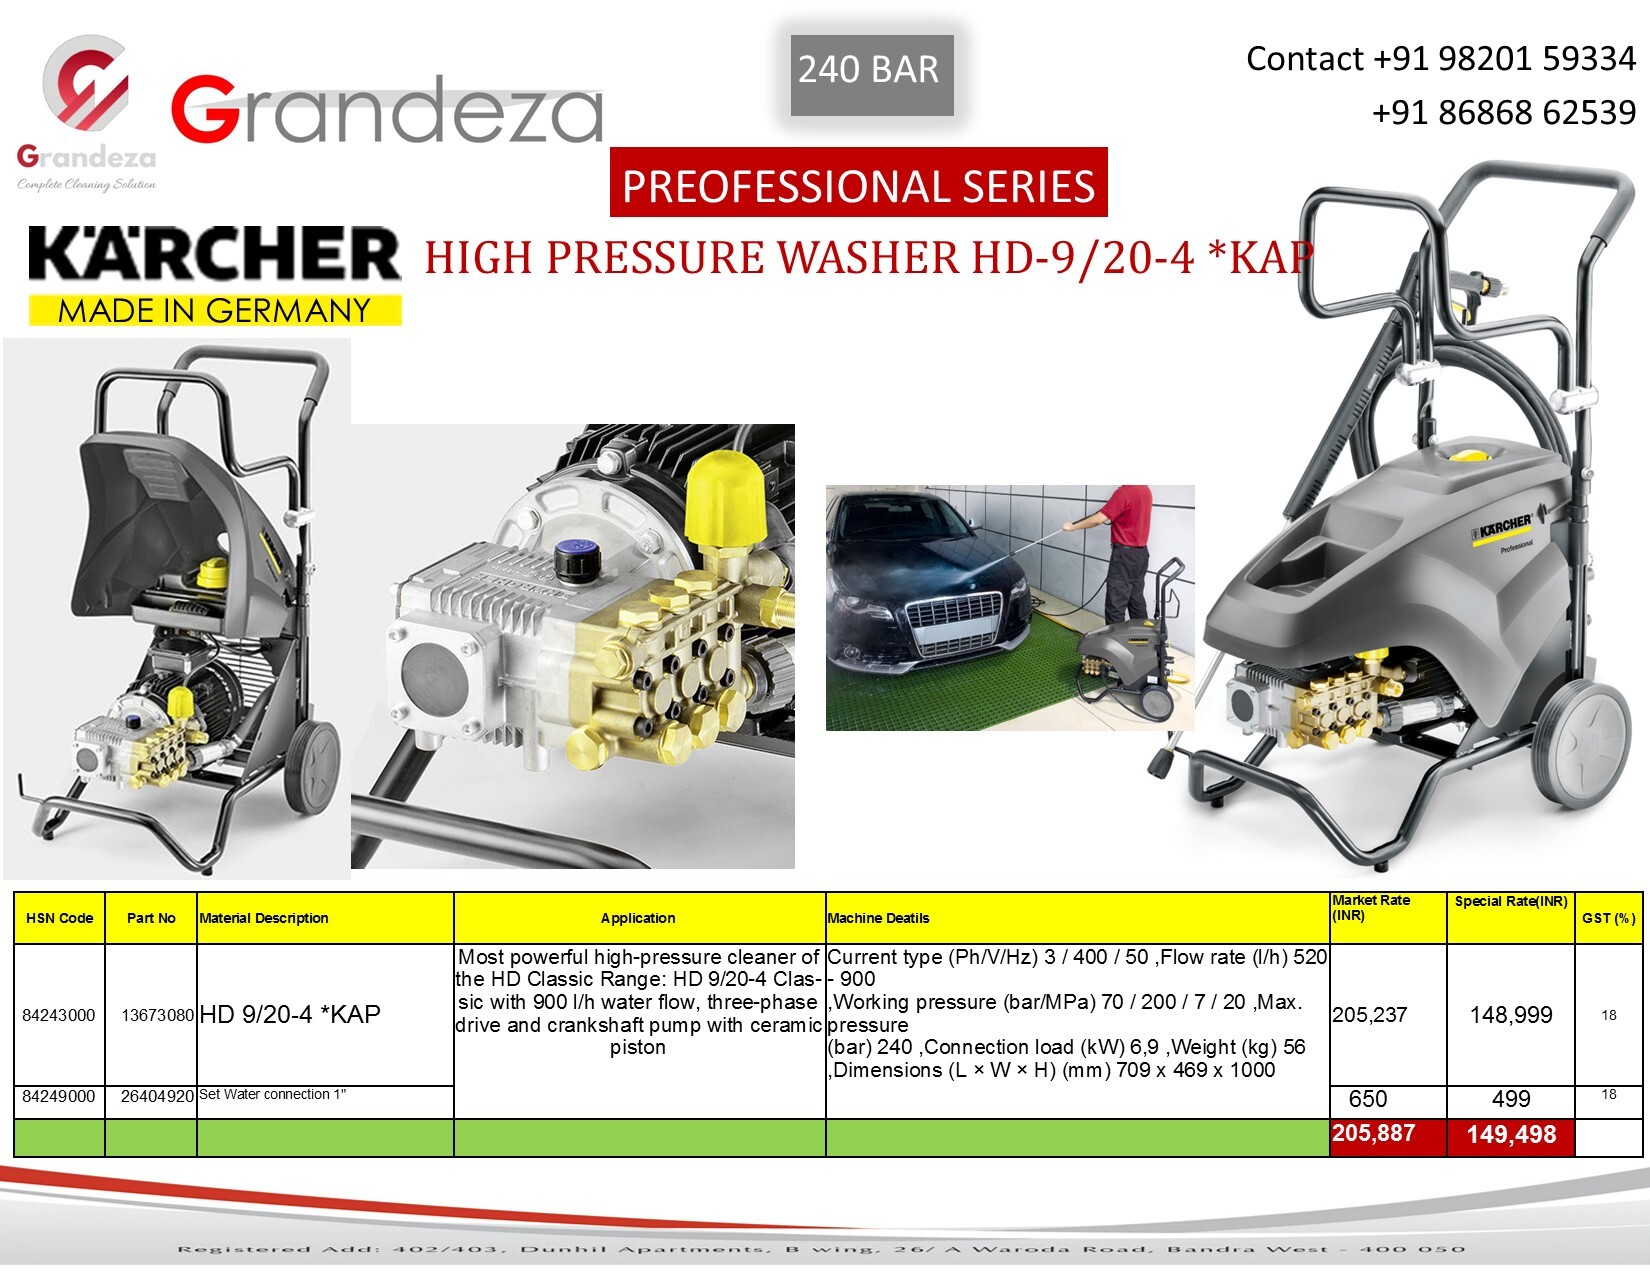 KARCHER high pressure washer HD 9 20-4 KAP